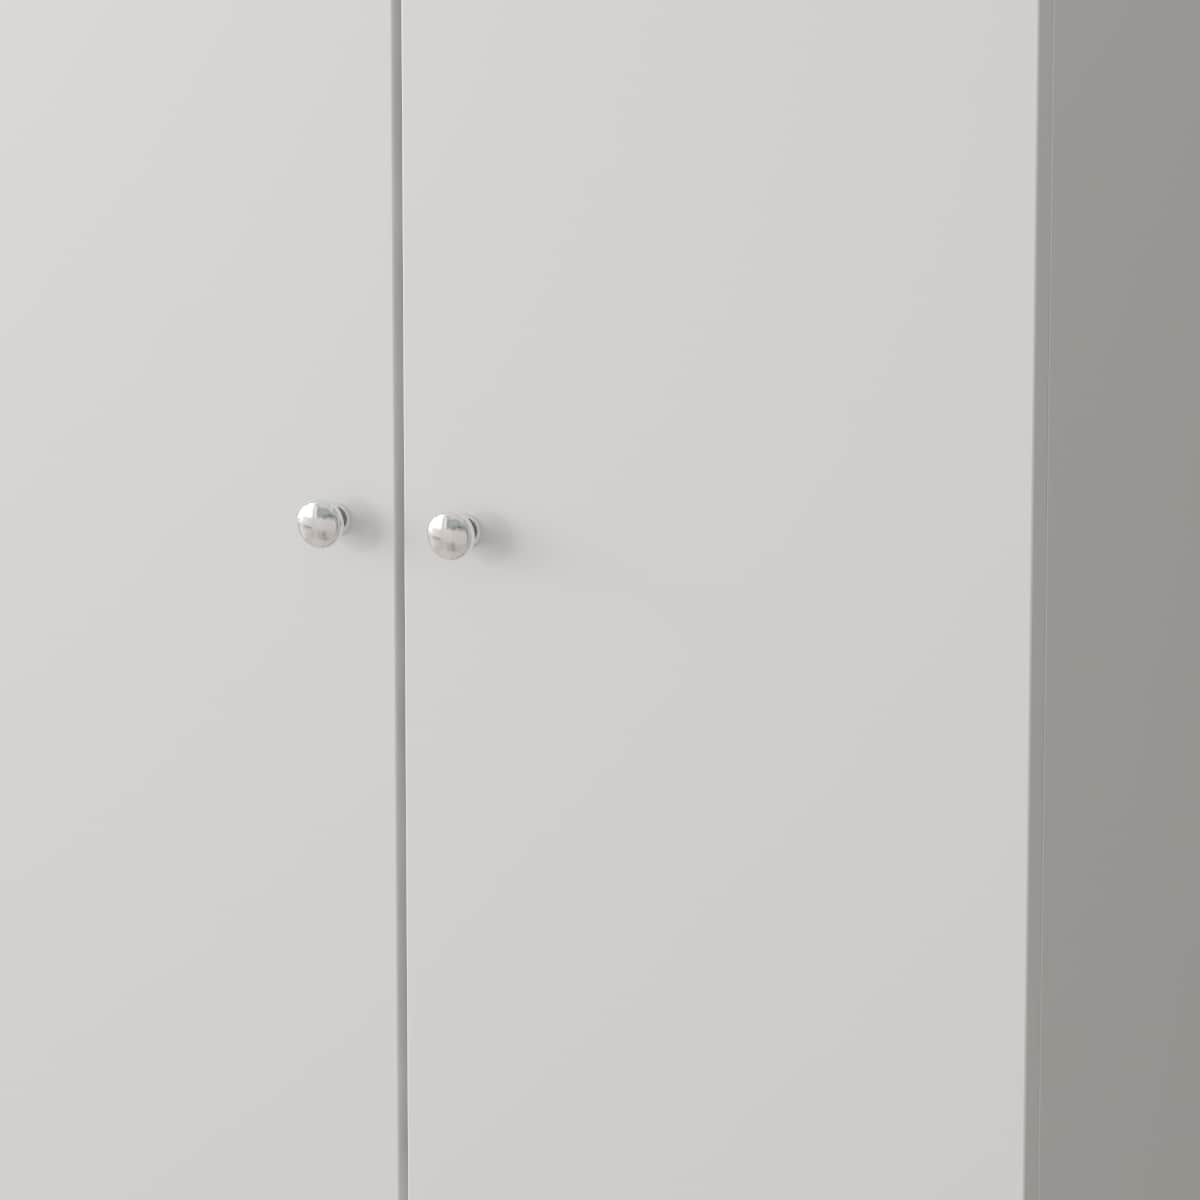 Shoe Cabinet 2-Door with Wheels — FUFUGAGA White